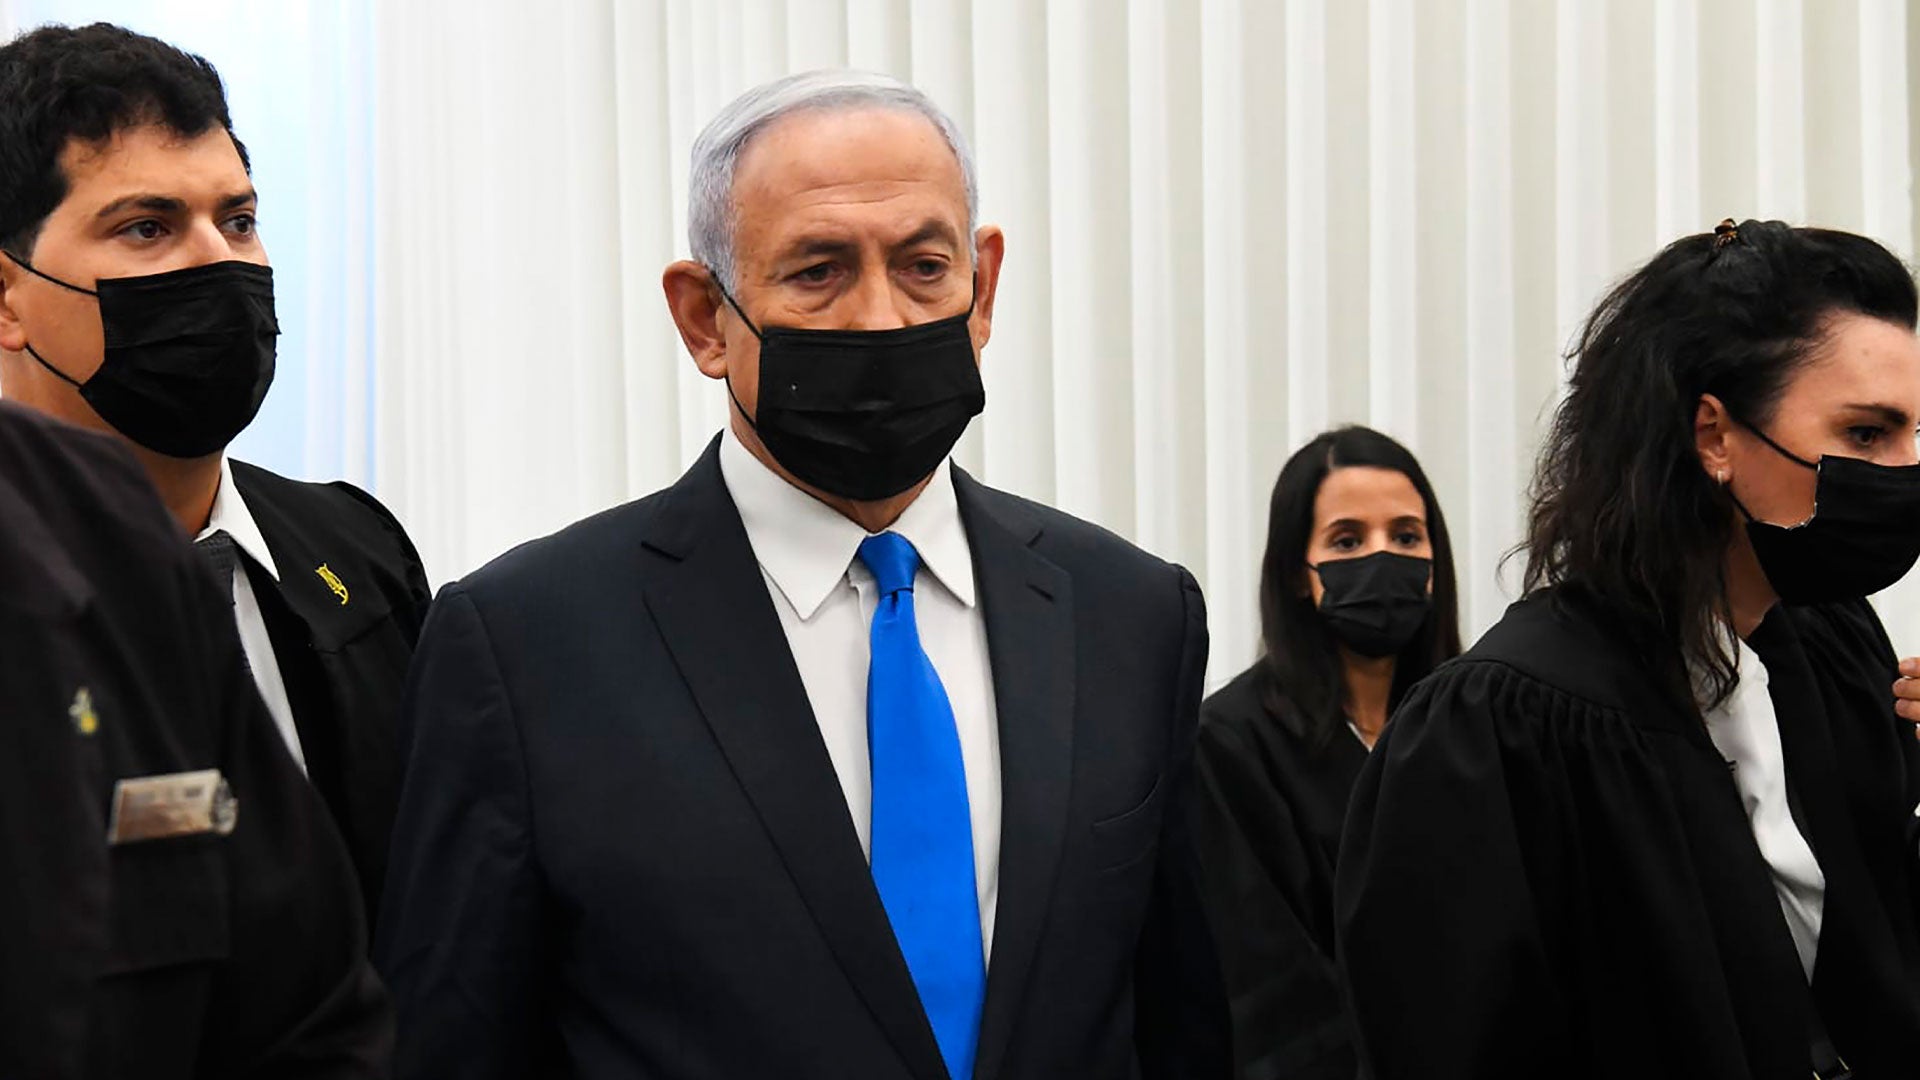 Netanyahu Considering Taking Plea Deal in Corruption Trial | CBN News